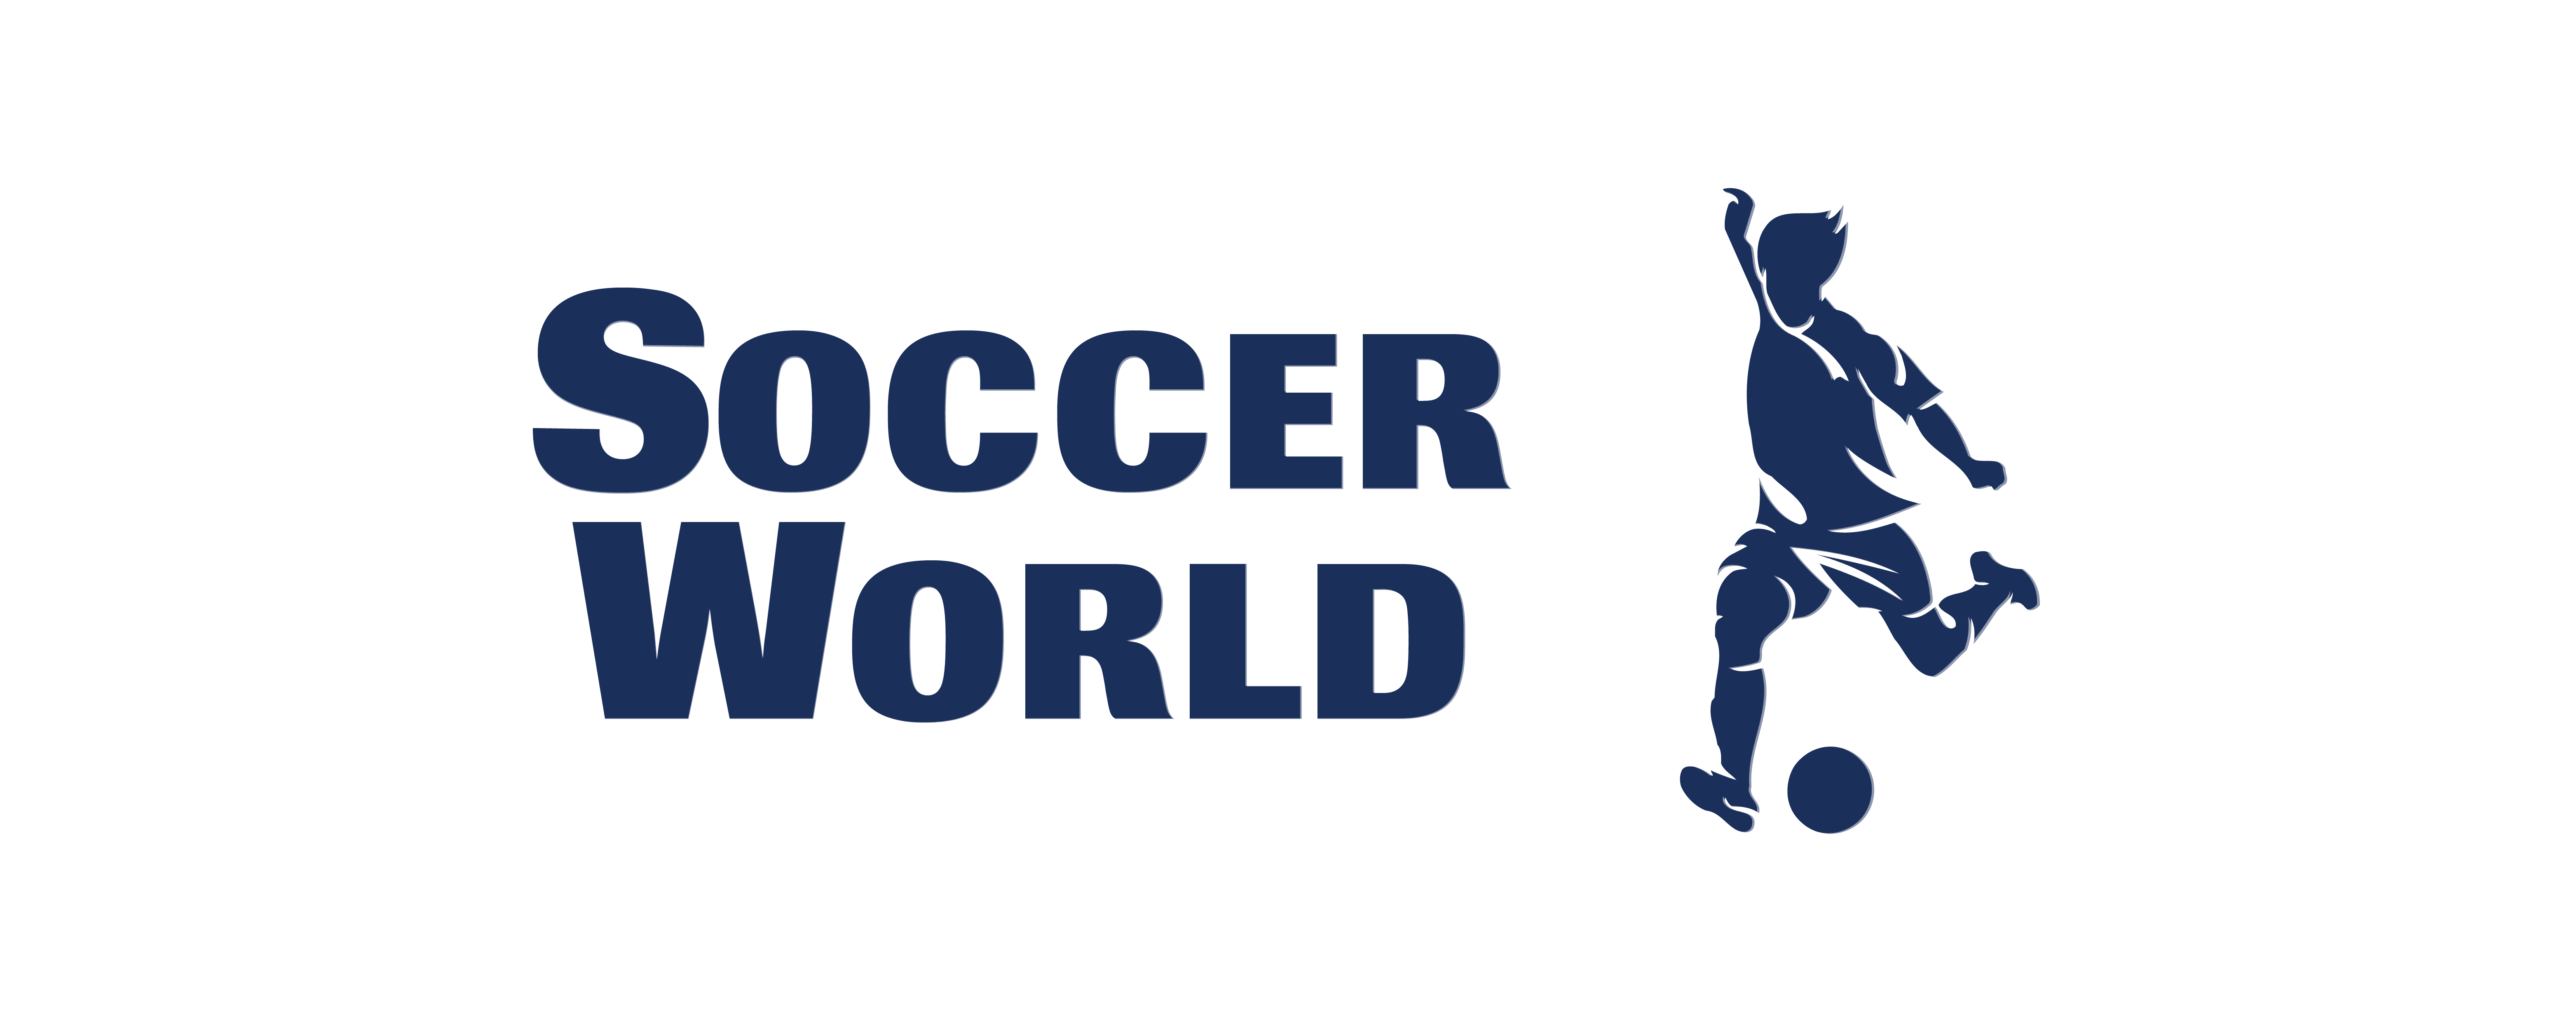 Soccer World - soccer, football & baseball clinics & leagues